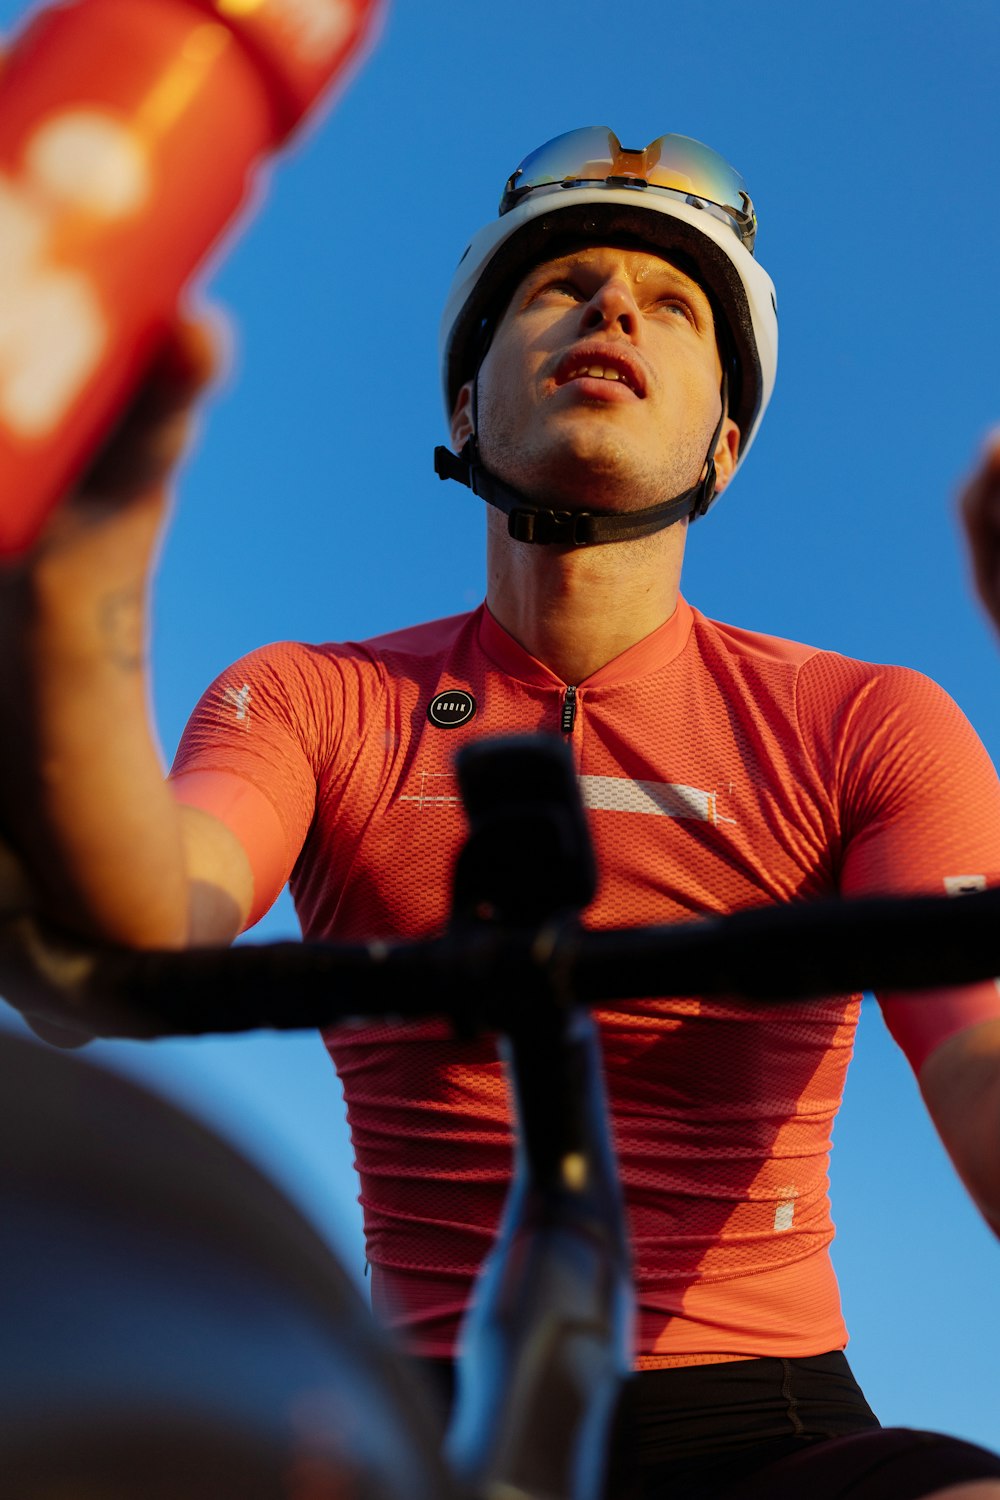 a man wearing a helmet while riding a bike